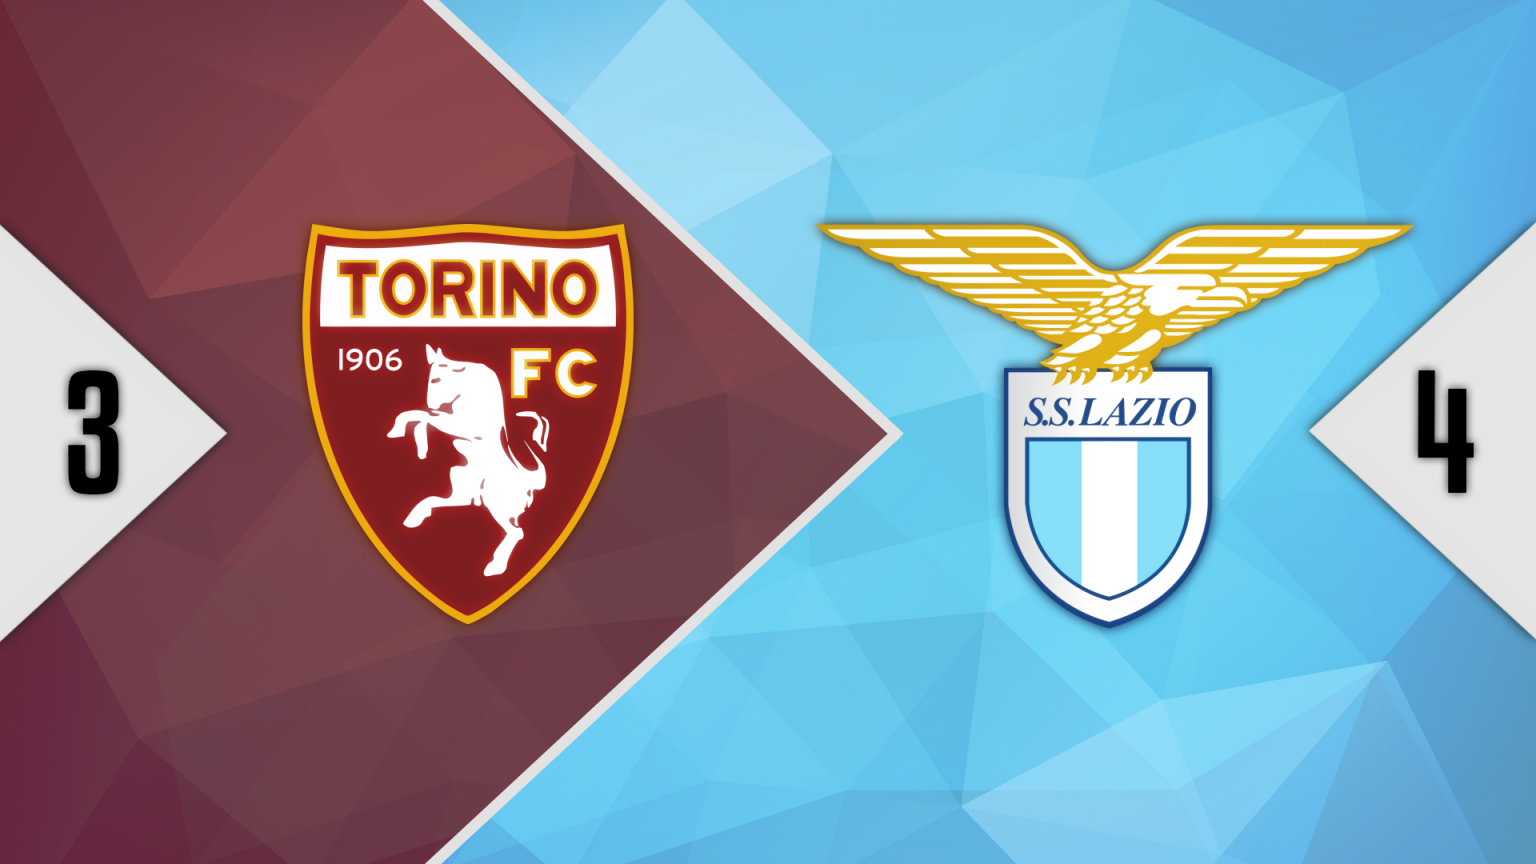 2020/21 Serie A, Torino 3-4 Lazio: Match Report | The Laziali